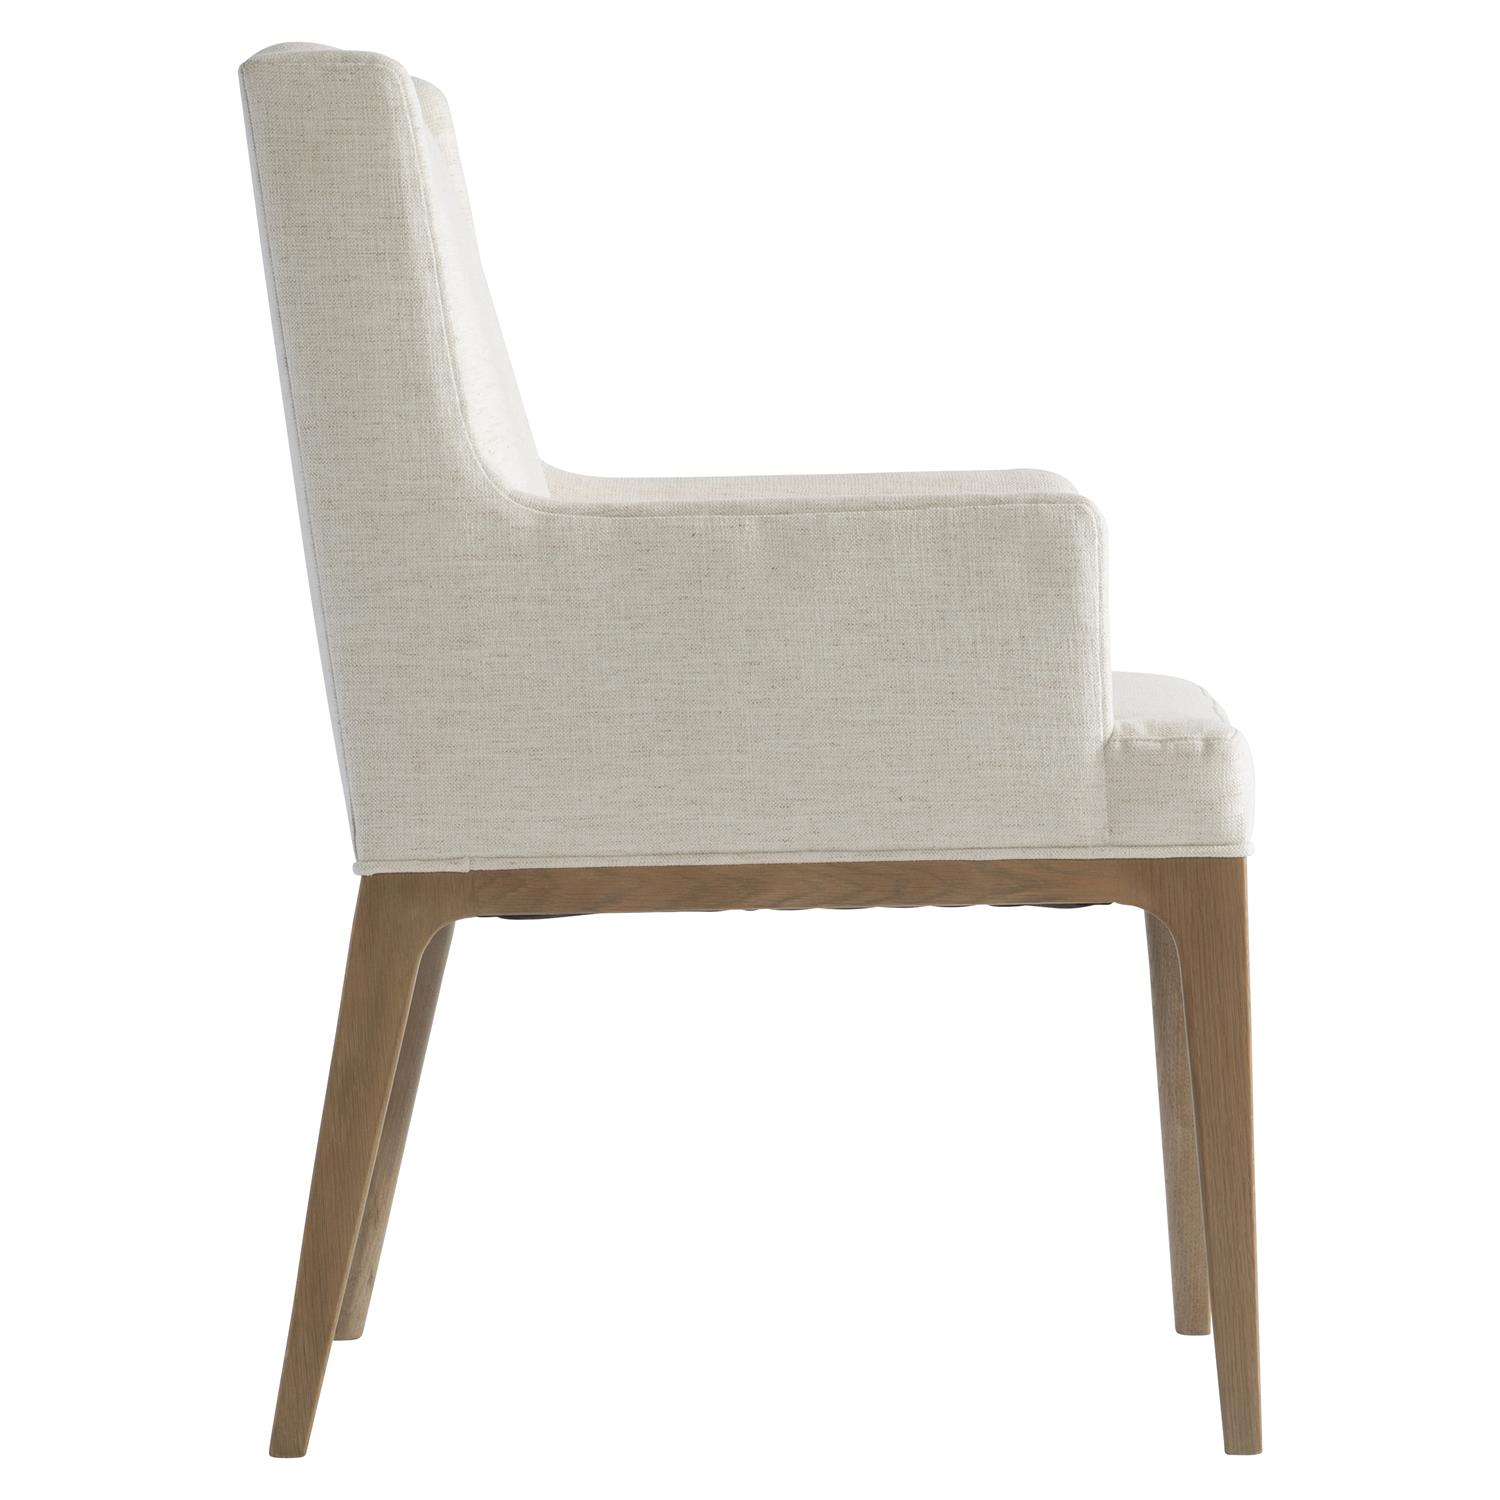 Modulum Arm Chair - Avenue Design high end furniture in Montreal